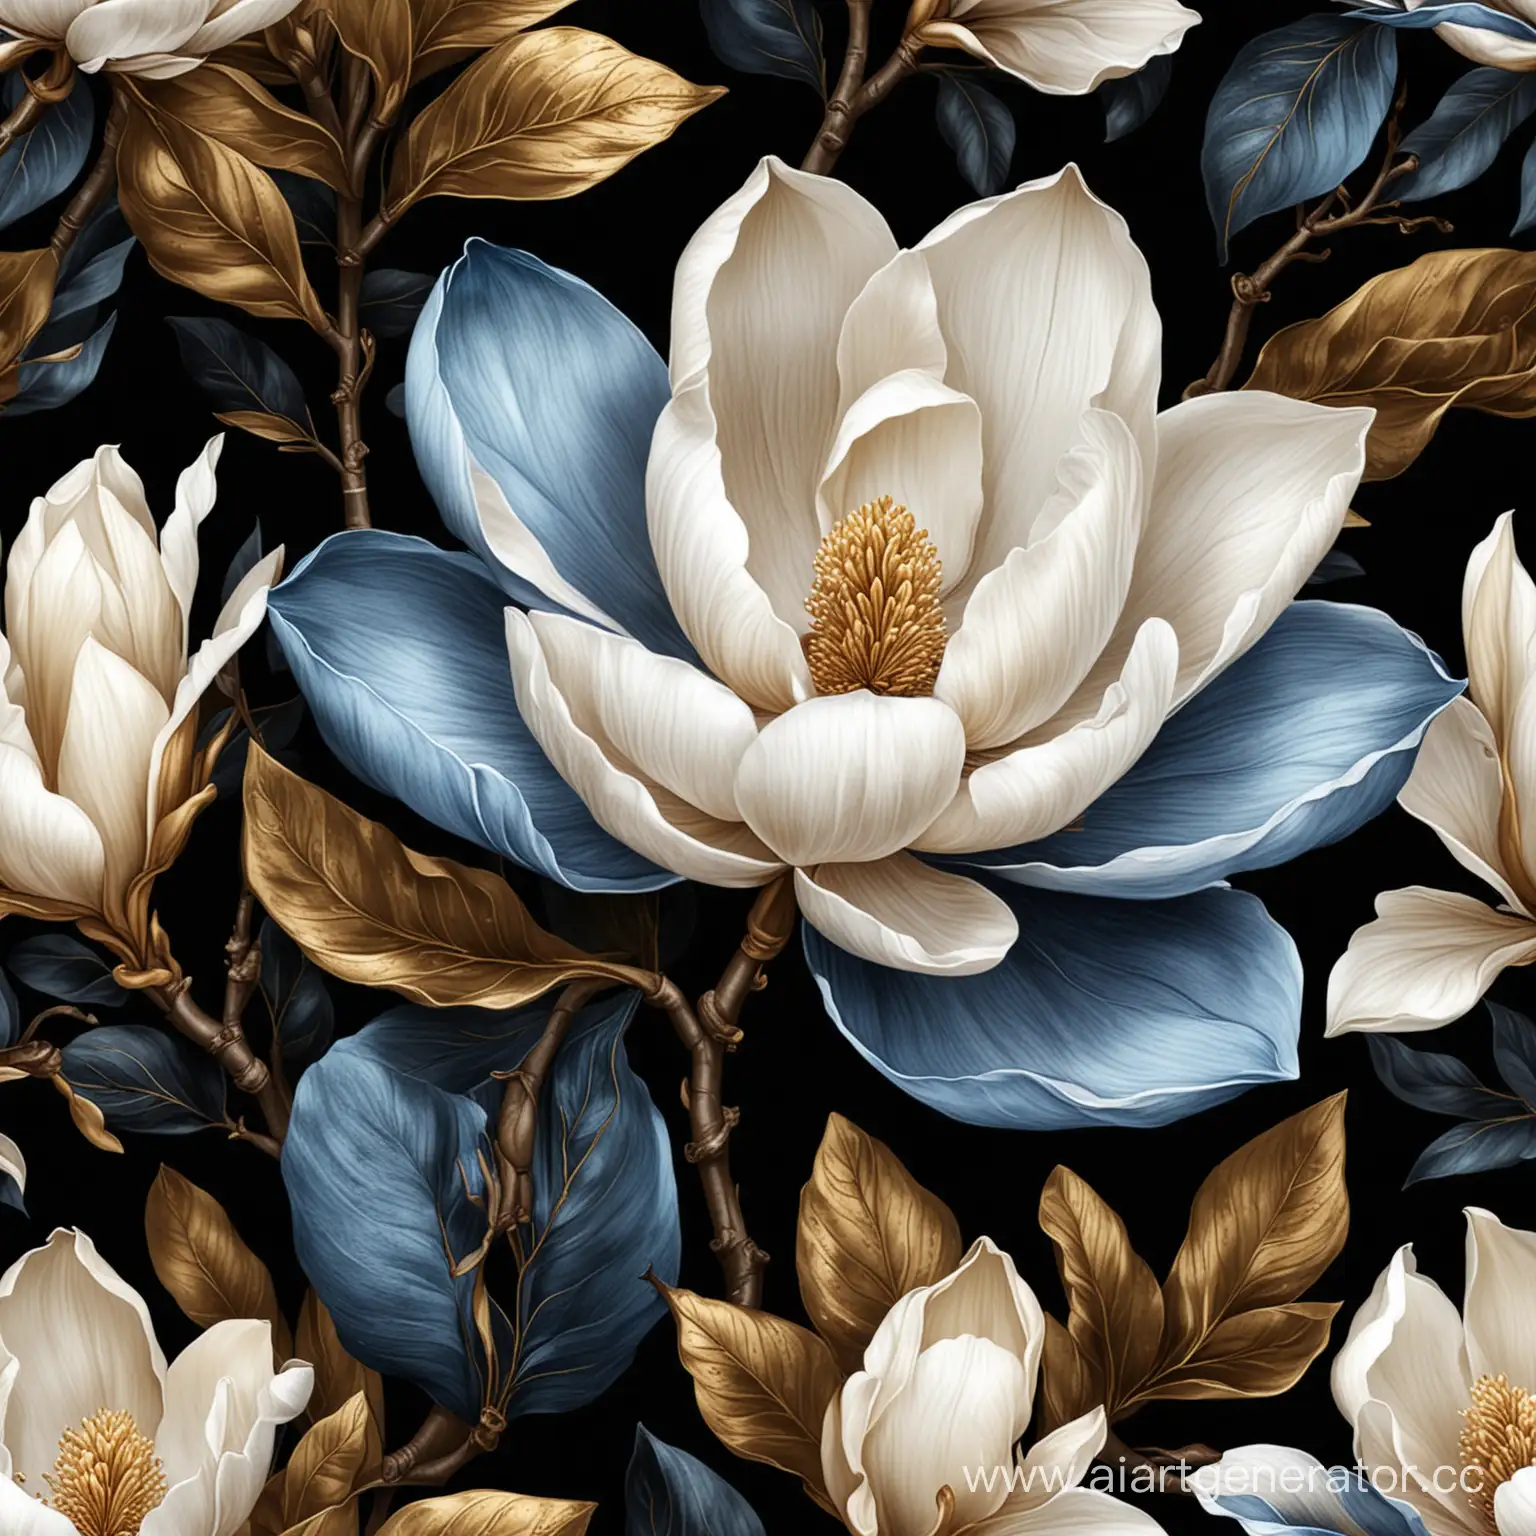 golden, blue and white Magnolia flower vector illustration on black background